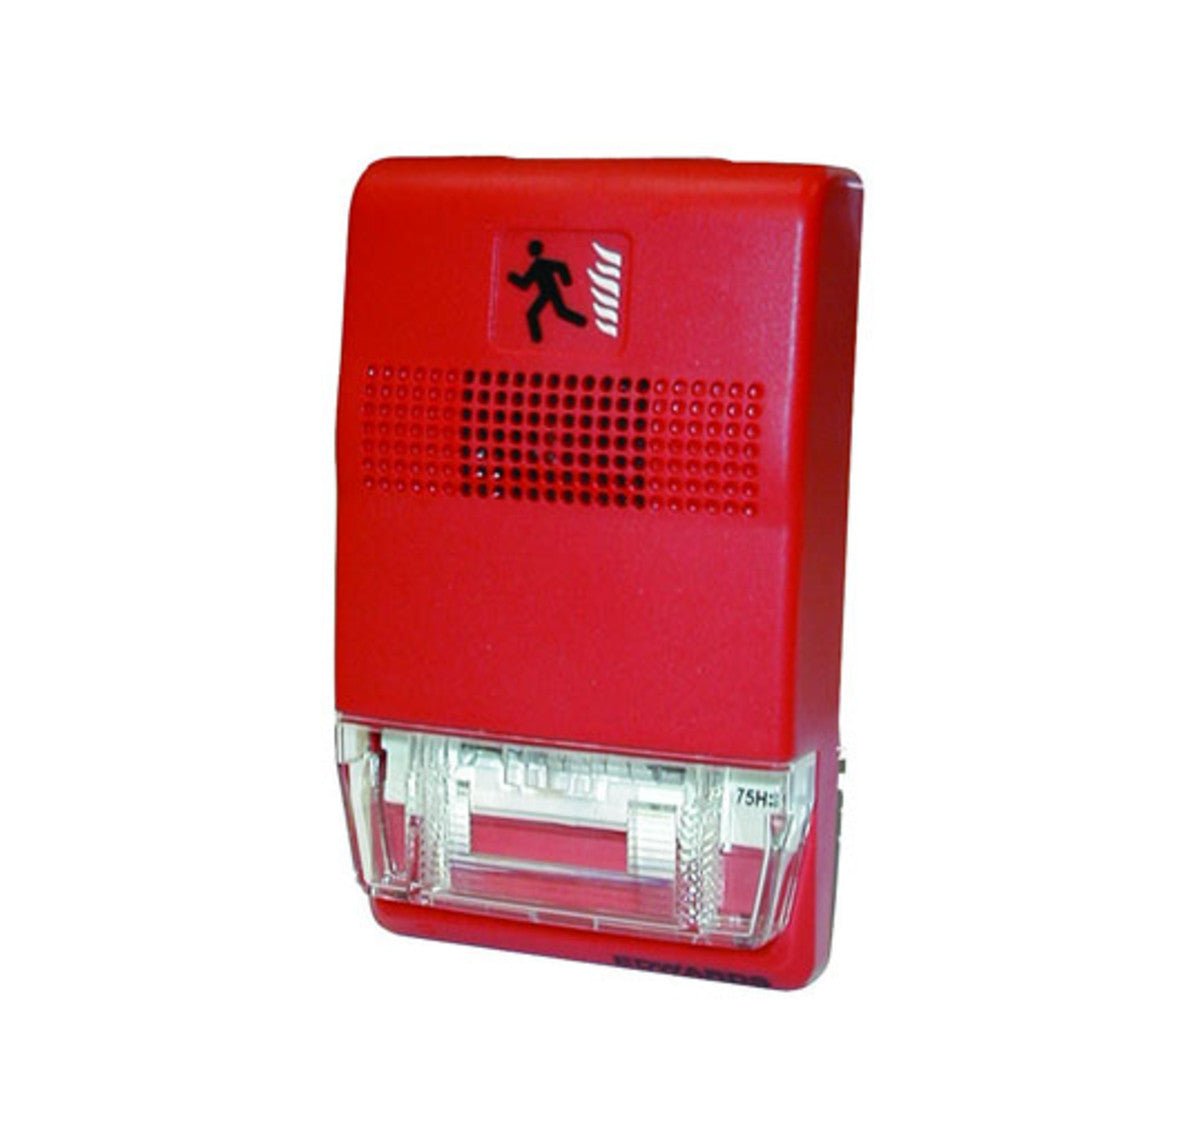 Edwards EG1R-HDVM - The Fire Alarm Supplier